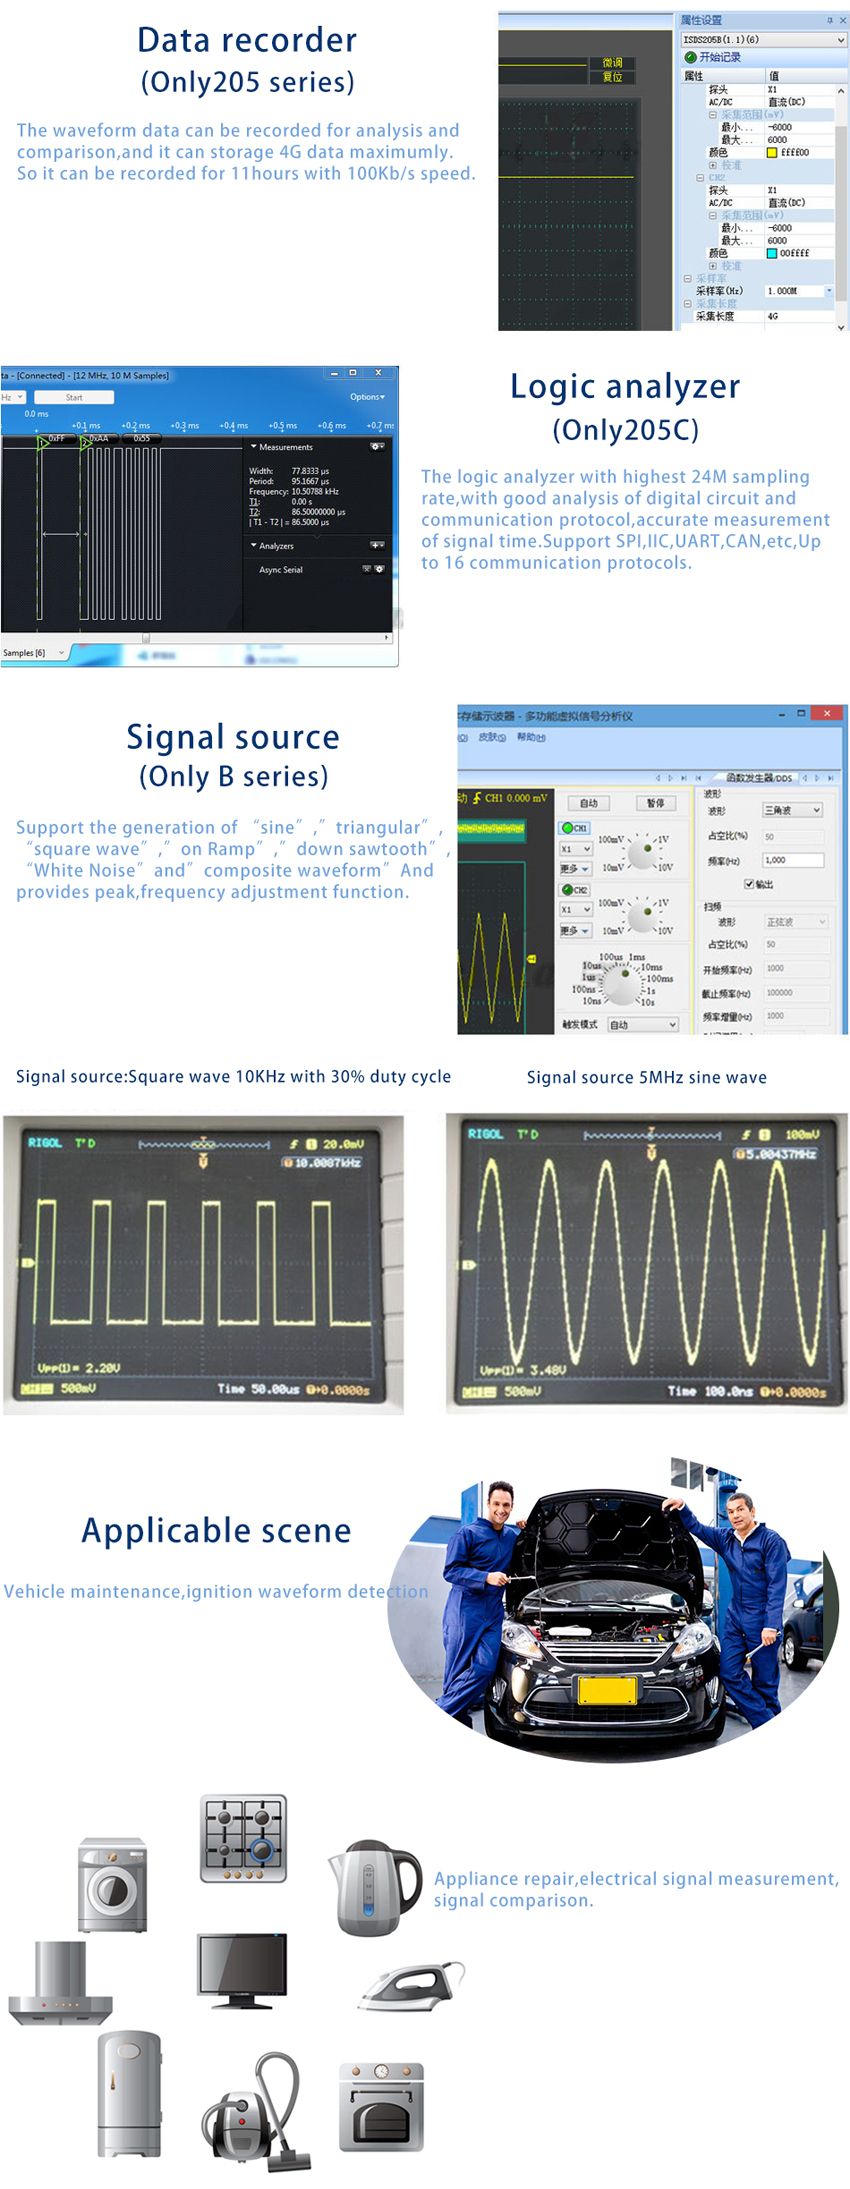 ISDS205X-Virtual-PC-USB-Oscilloscope-DDS-Signal-and-Logic-Analyzer-2CH-20MHz-Bandwidth-48MSas-8bit-A-1103052